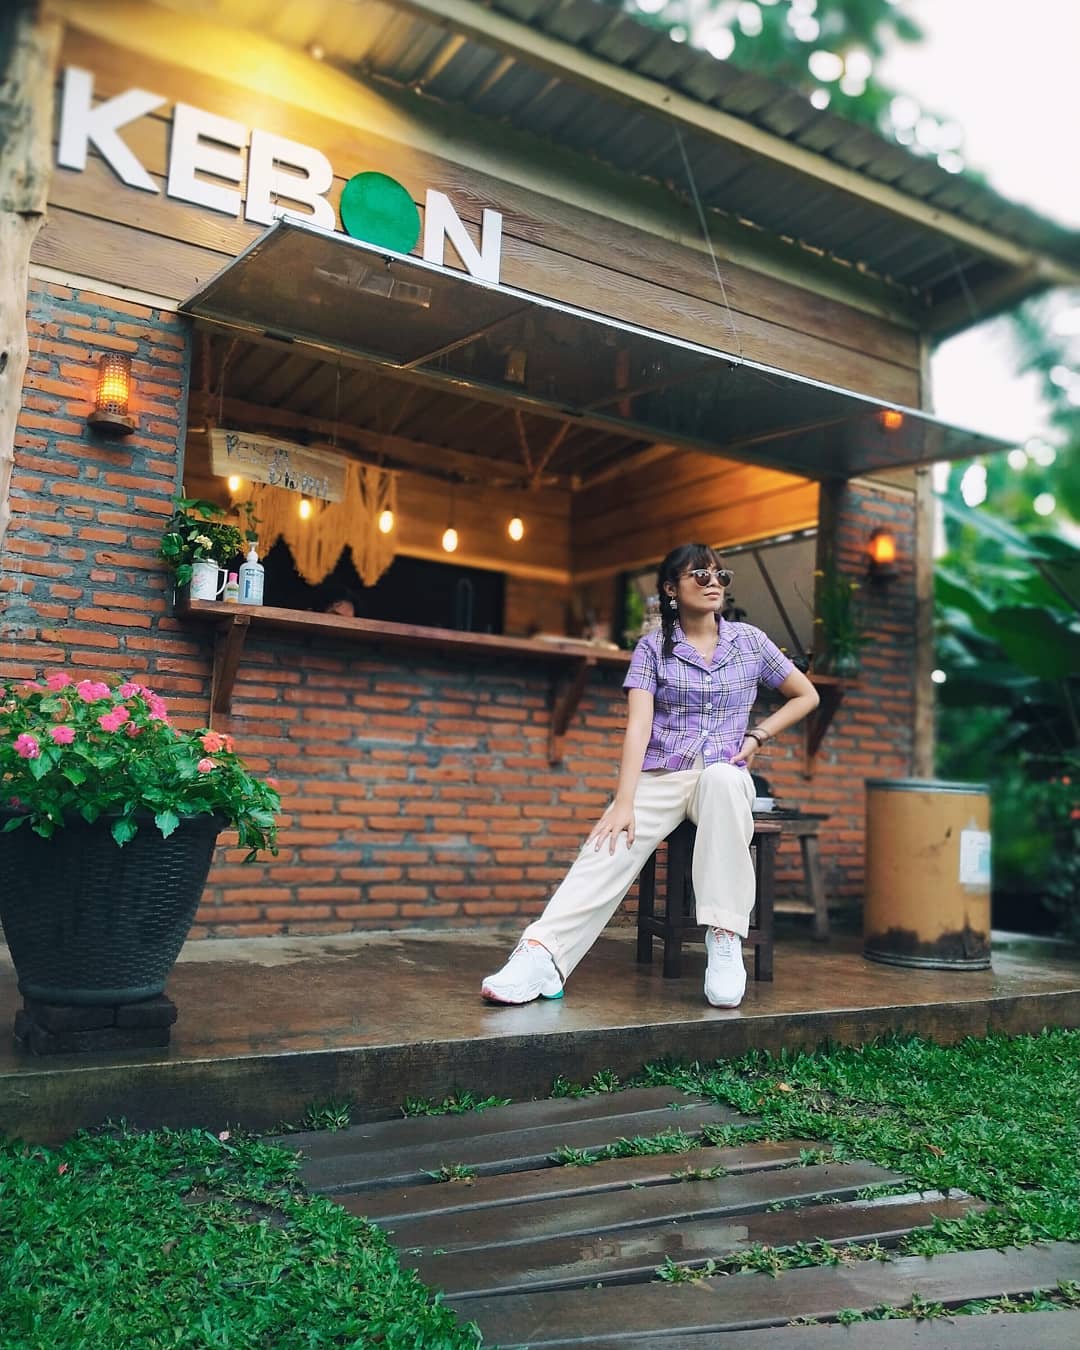 View Kebon TR Cafe